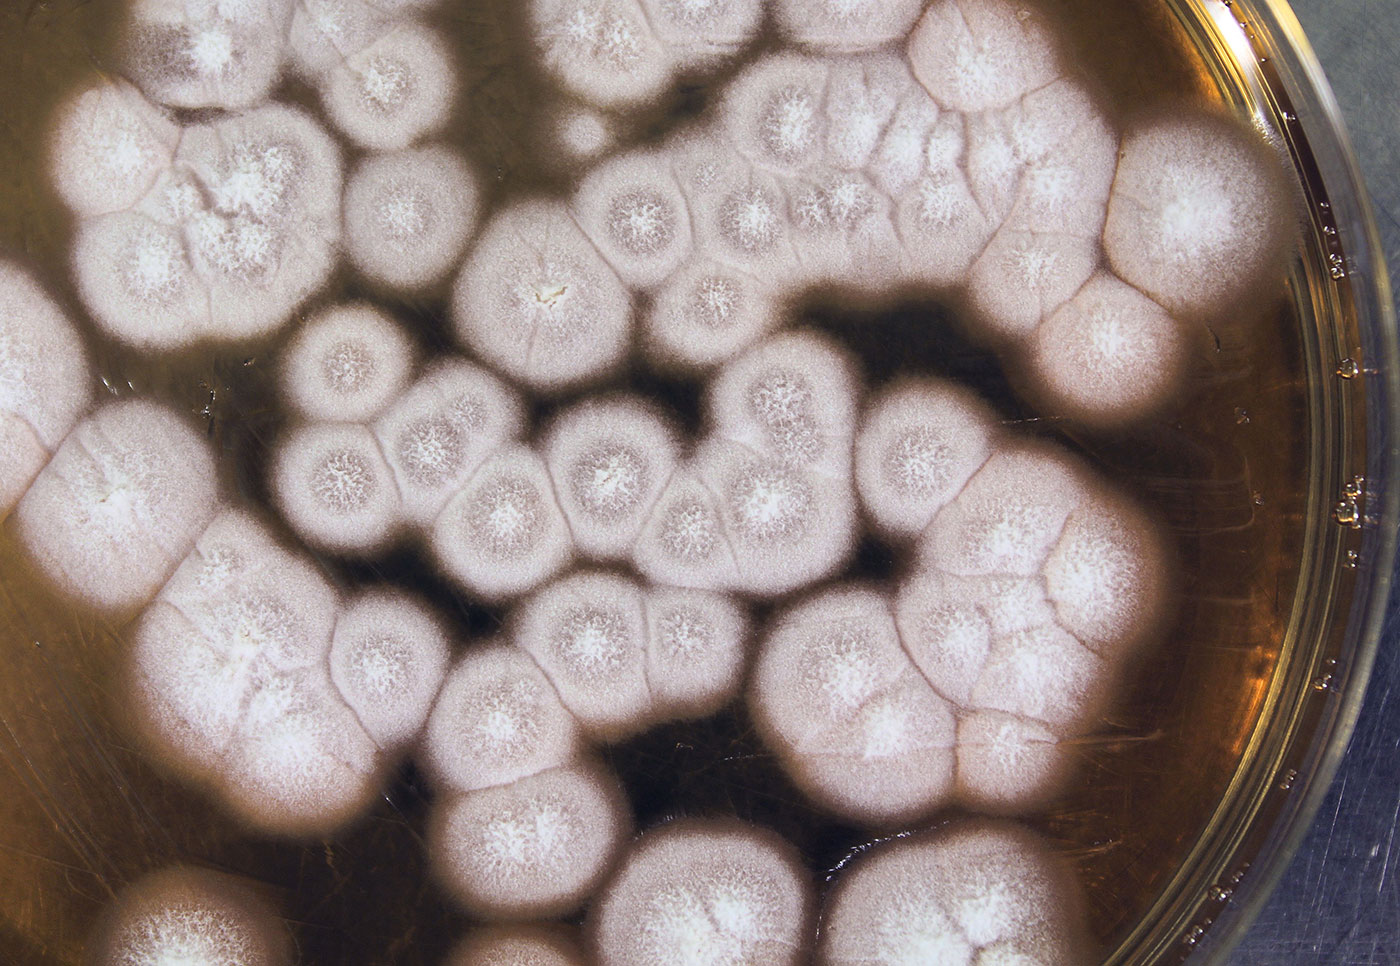 C1 cells in a petri dish